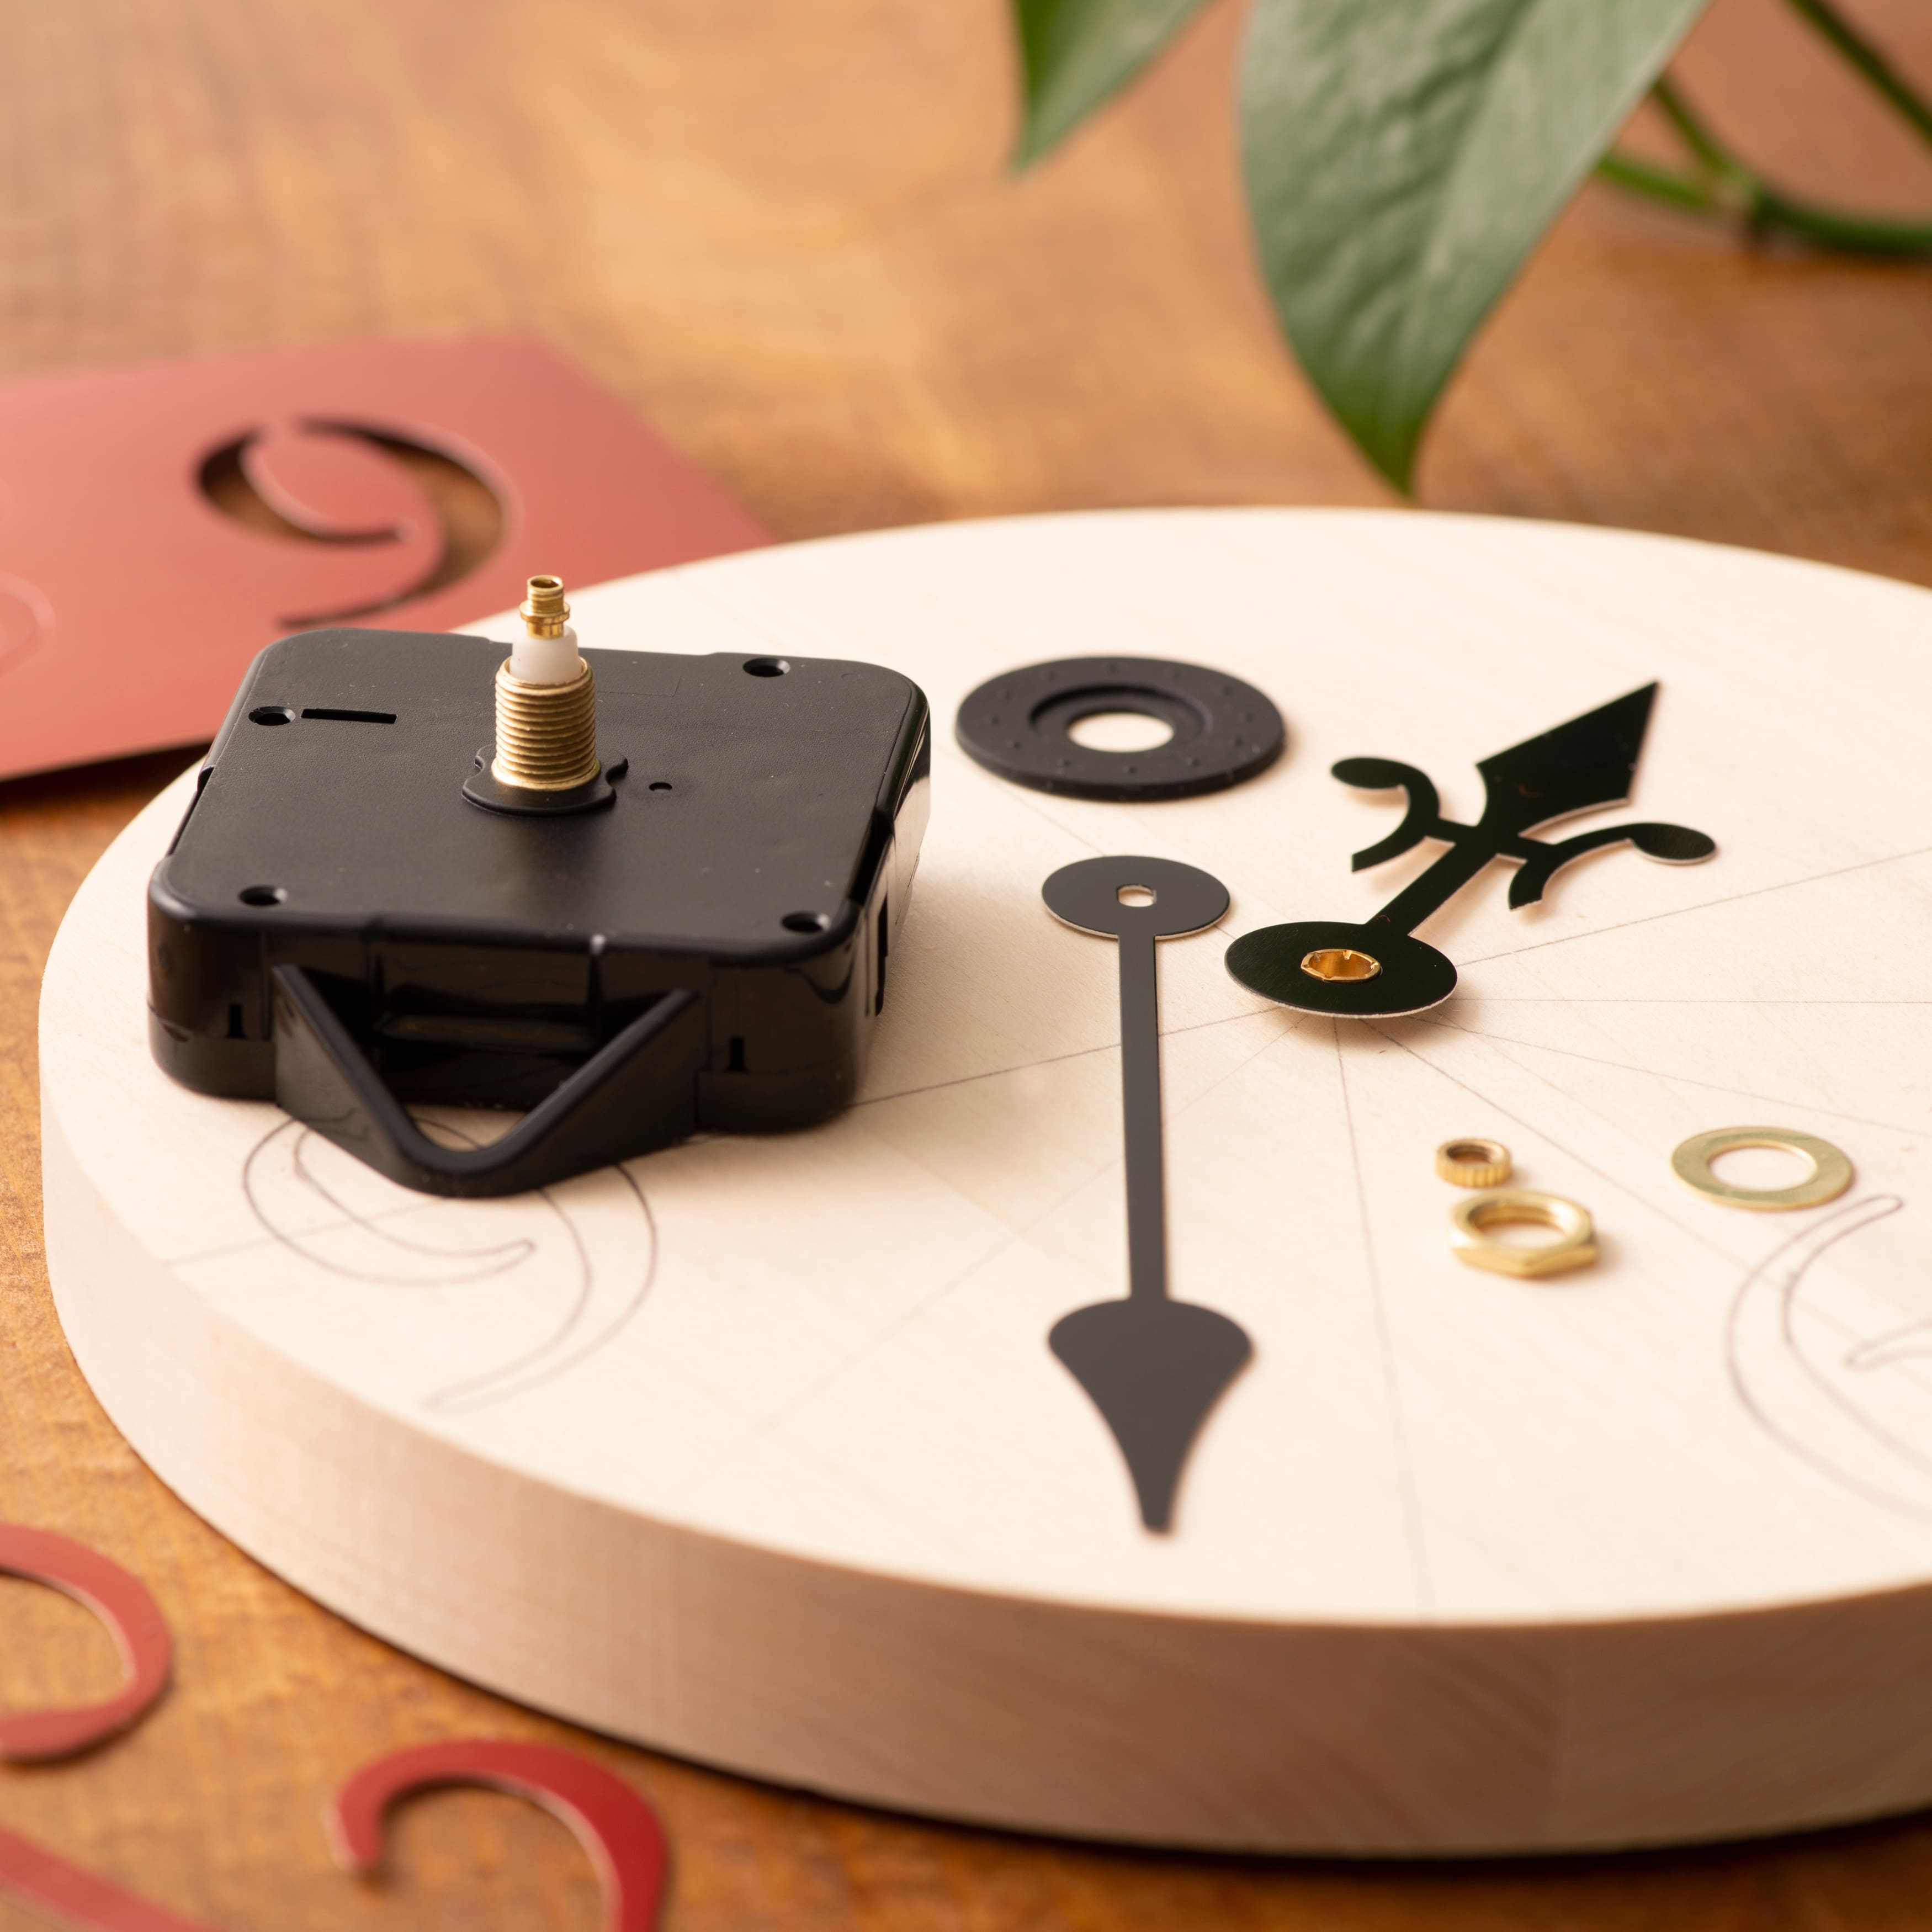 6 Pack: 1/4&#x22; Clock Movement Kit by Make Market&#xAE;